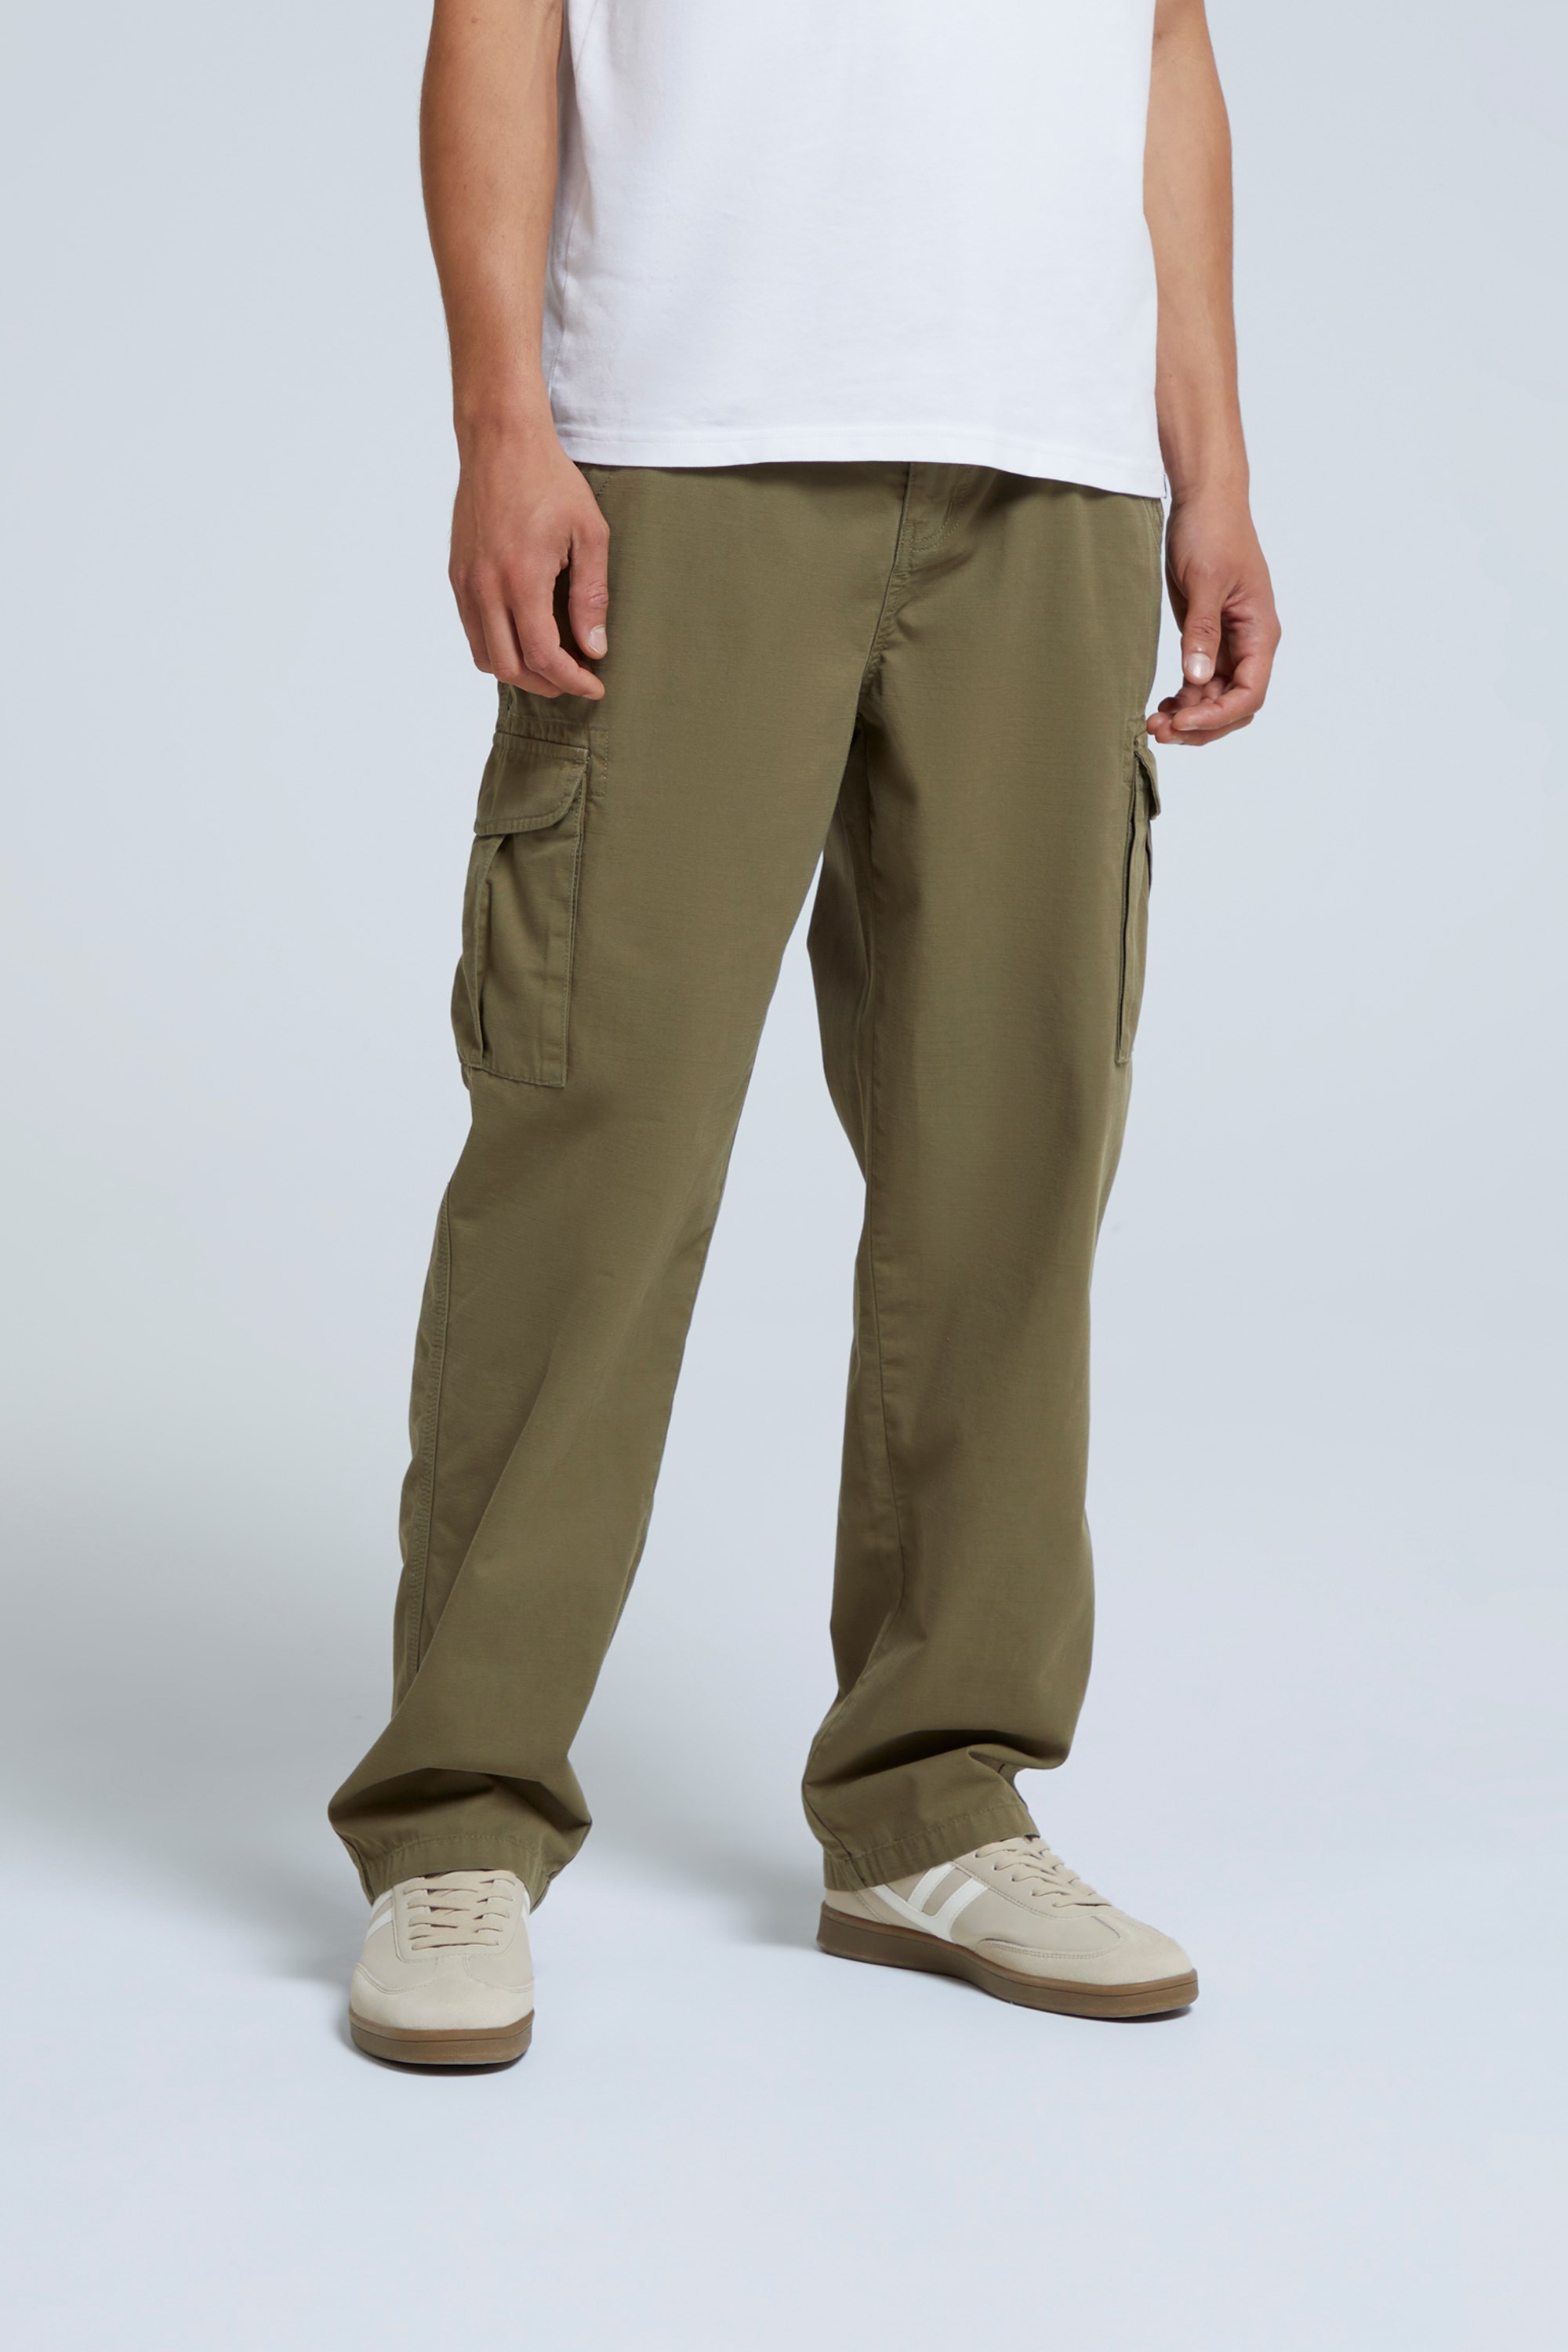 Merrick Mens Organic Trousers - Green